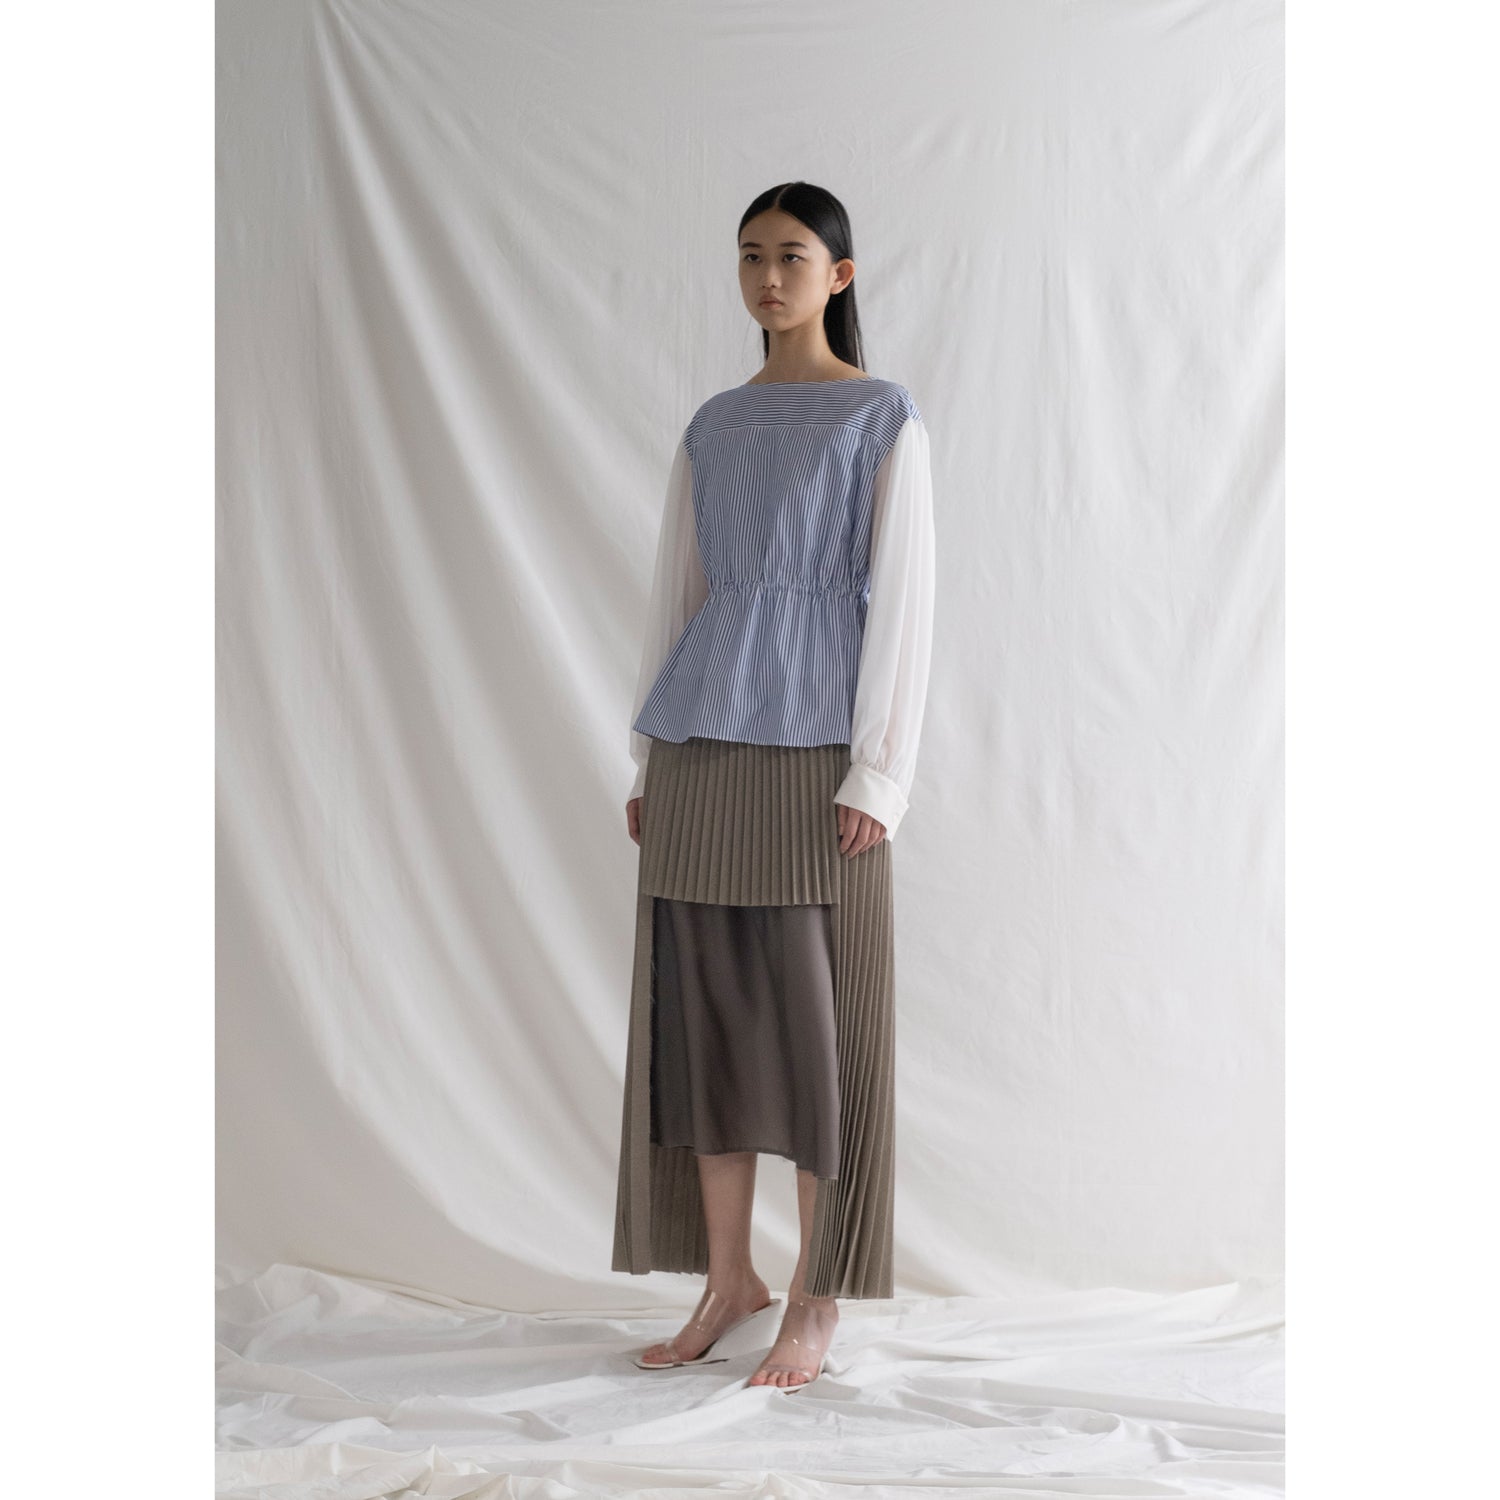 Cutout Pleats Skirt / beige